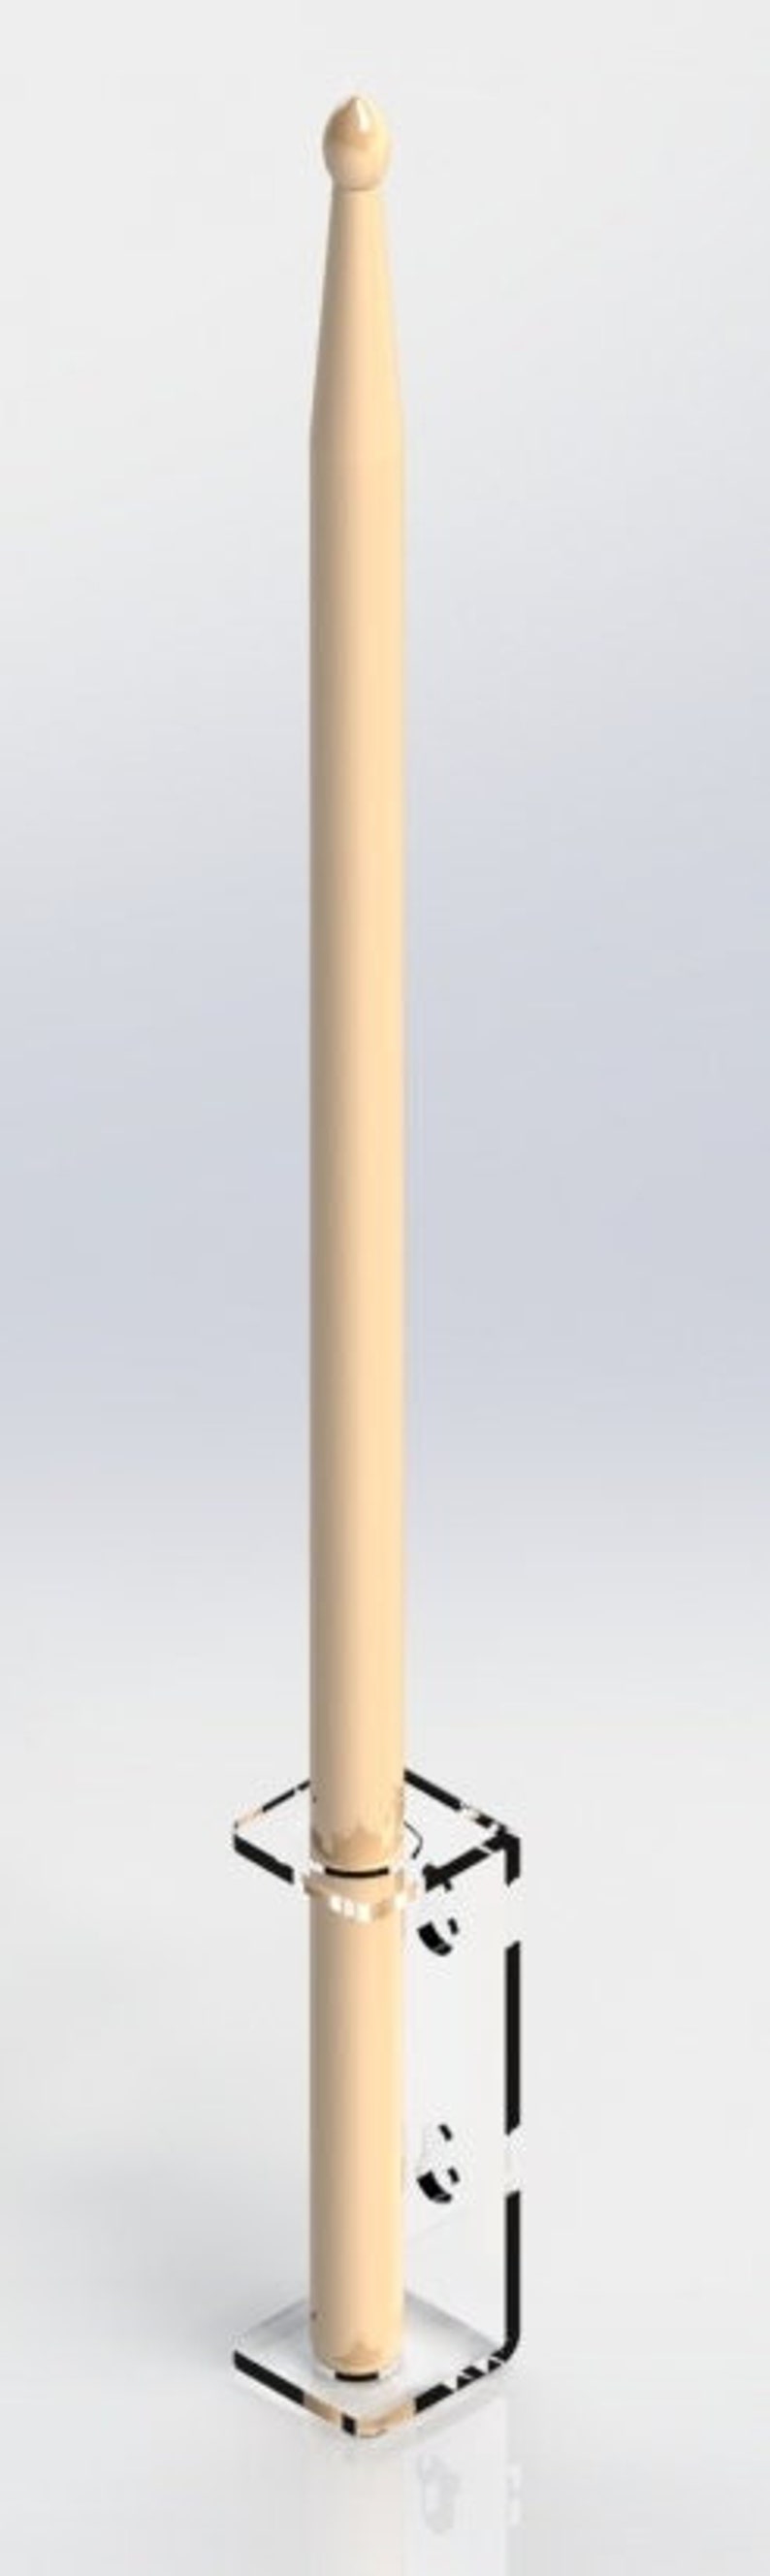 Vertical Drumstick Display Rack for a One single Drumstick image 1